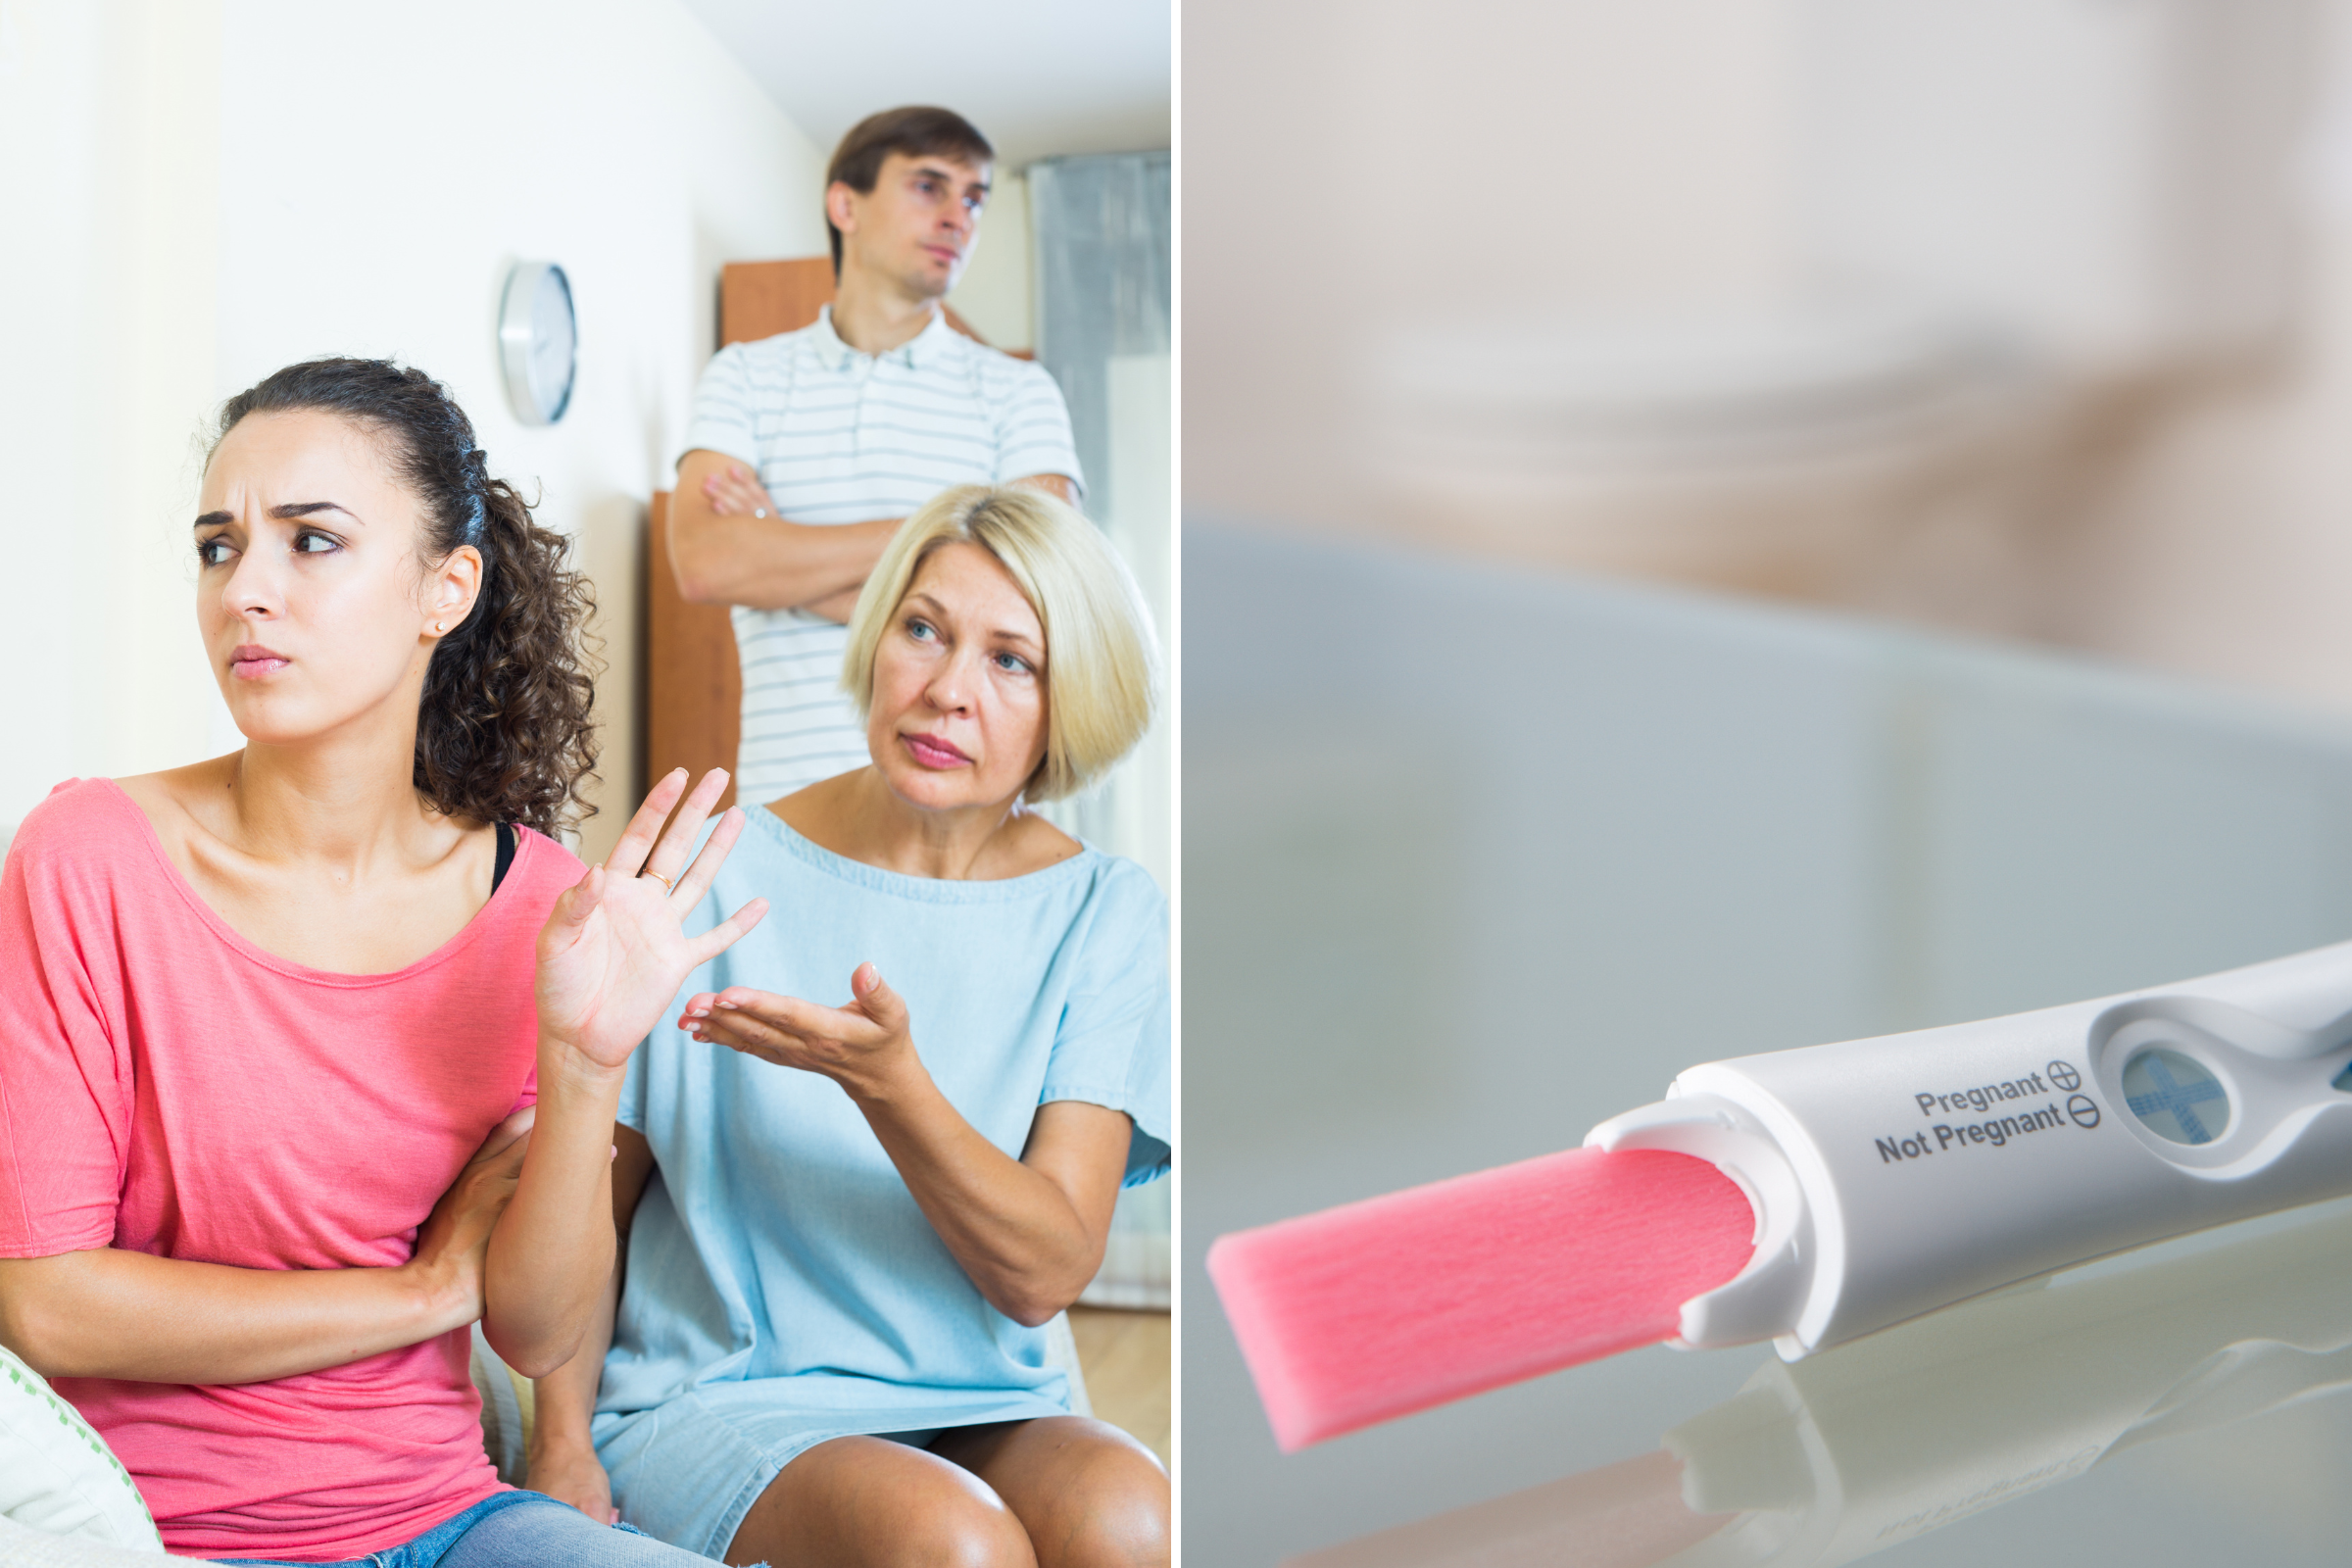 Internet Slams ‘Bizarre’ Mother-in-Law Keeping Used Pregnancy Test